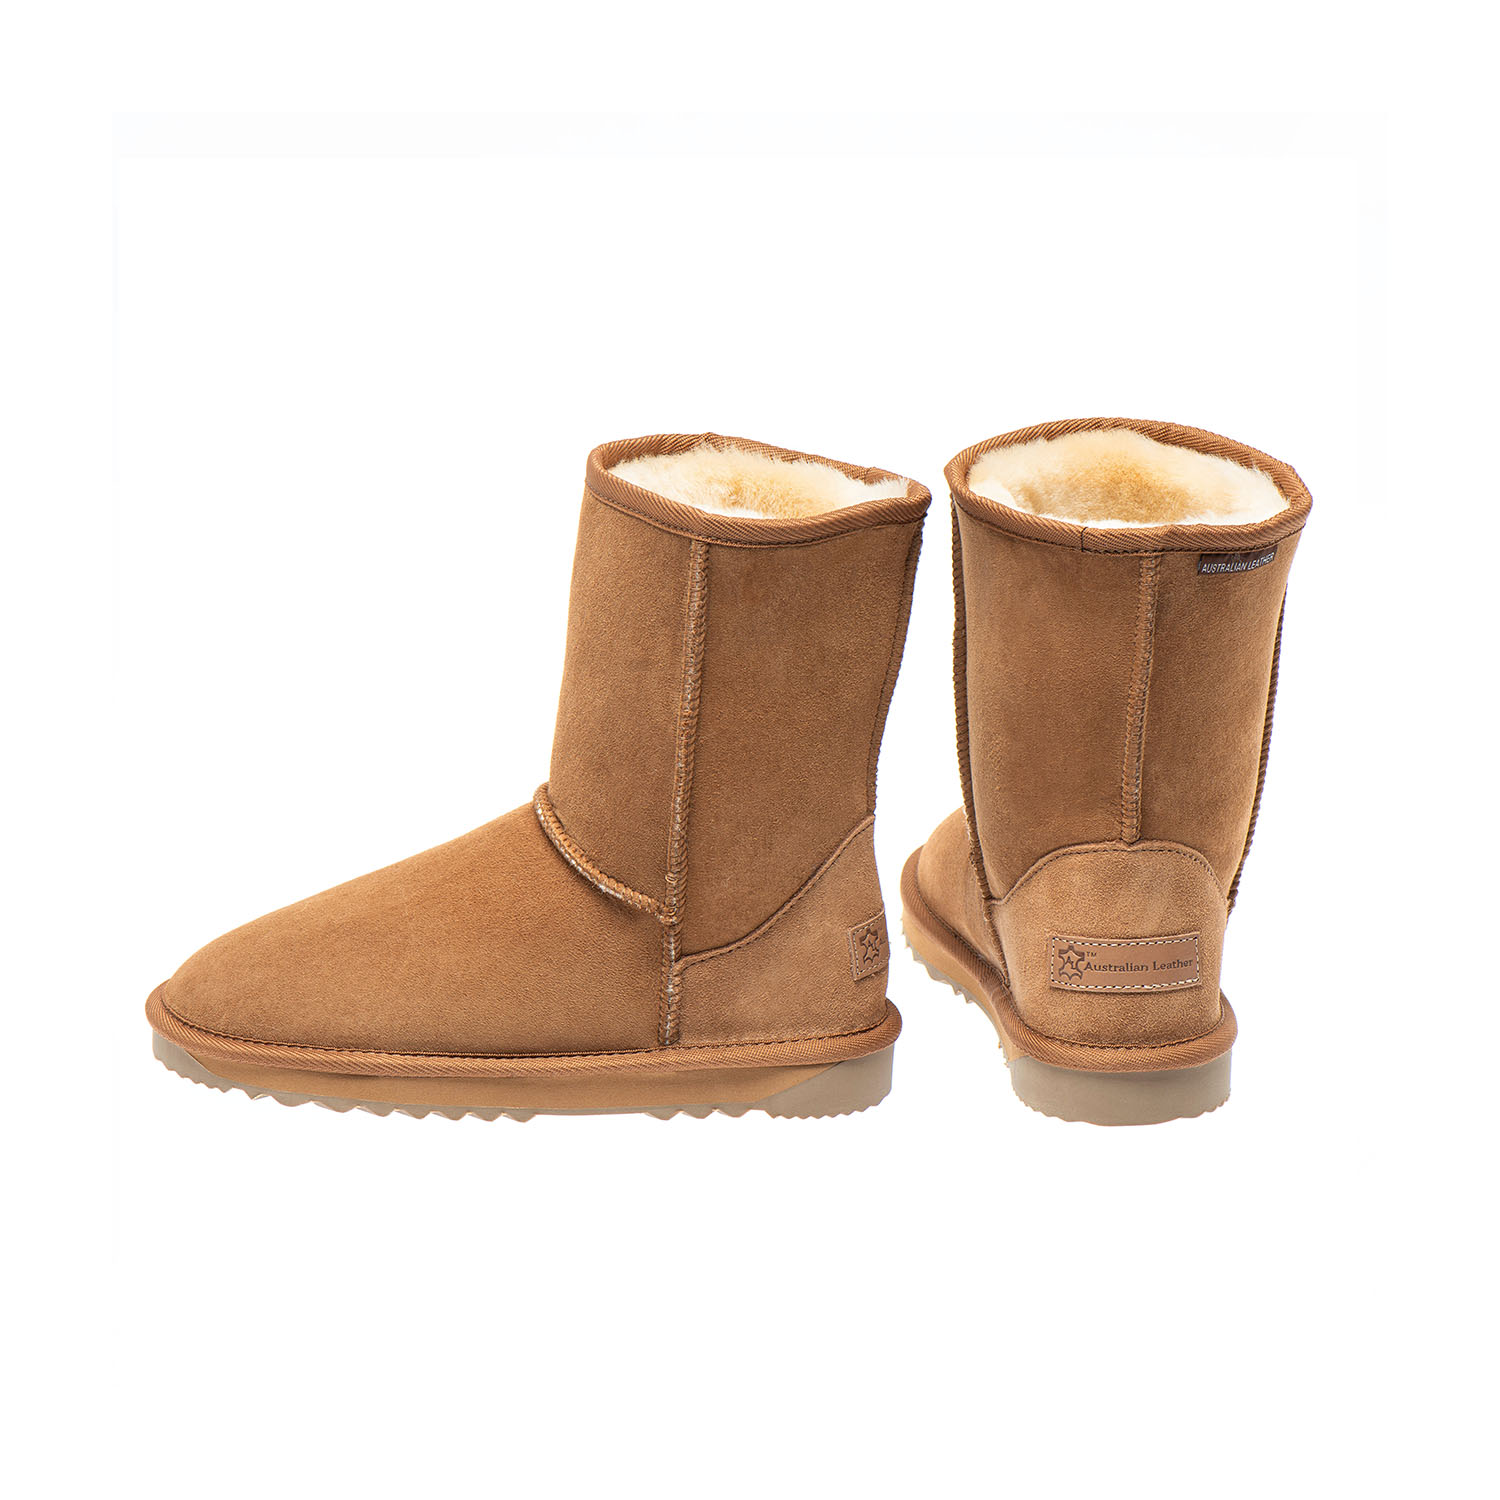 Australian Leather Classic Short Sheepskin Boots 04